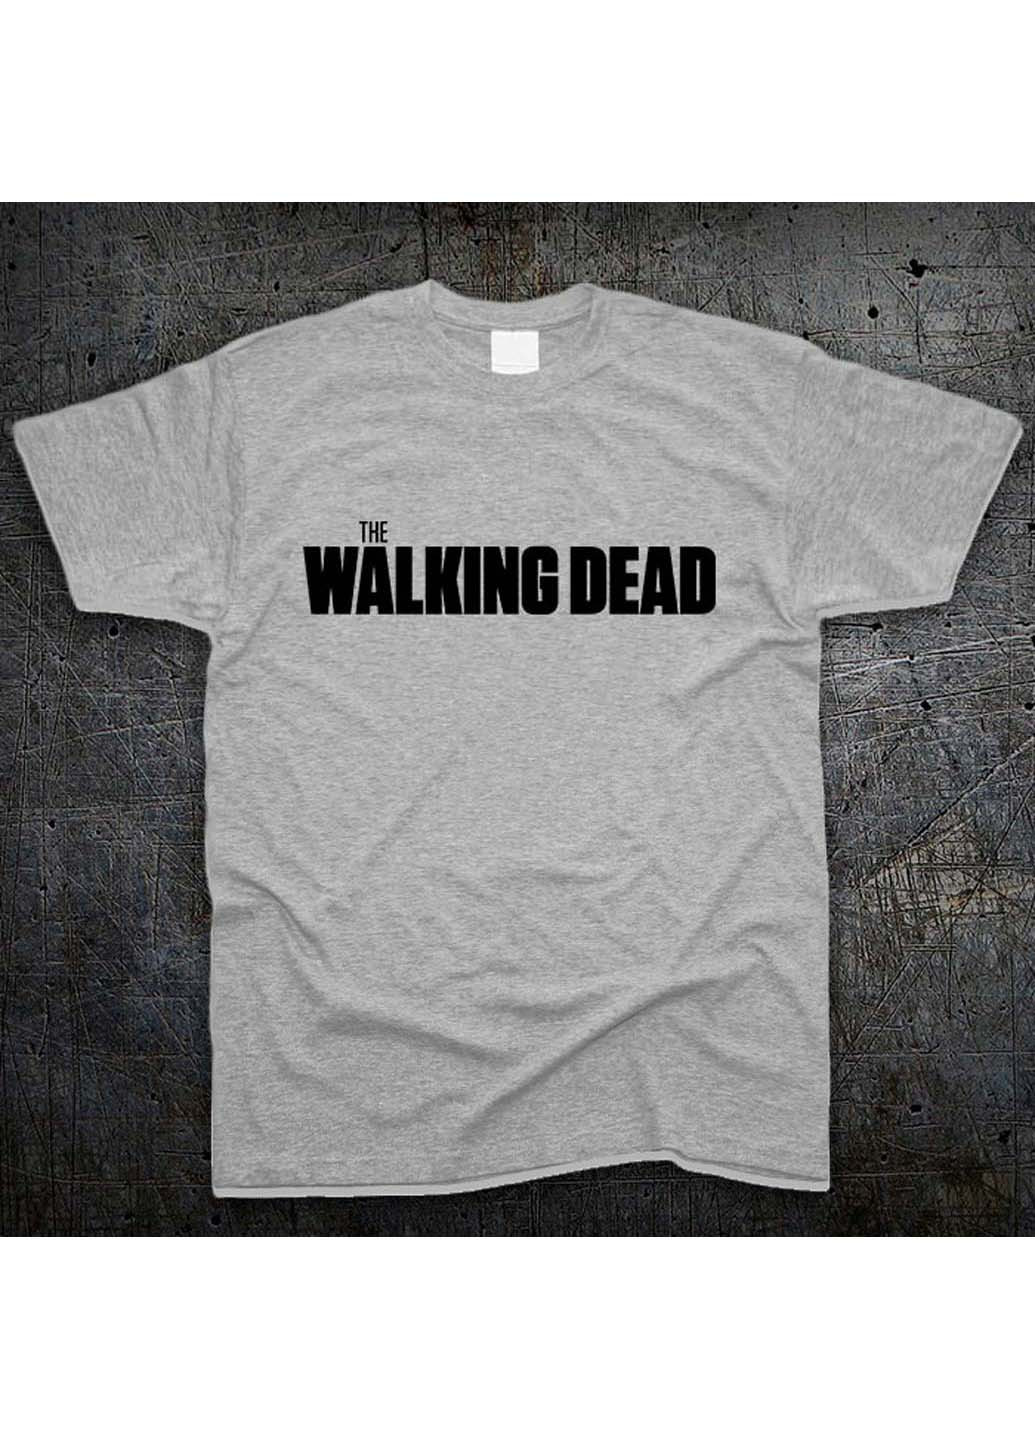 Сіра футболка Fruit of the Loom Логотип Ходячие Мертвецы Logo The Walking Dead